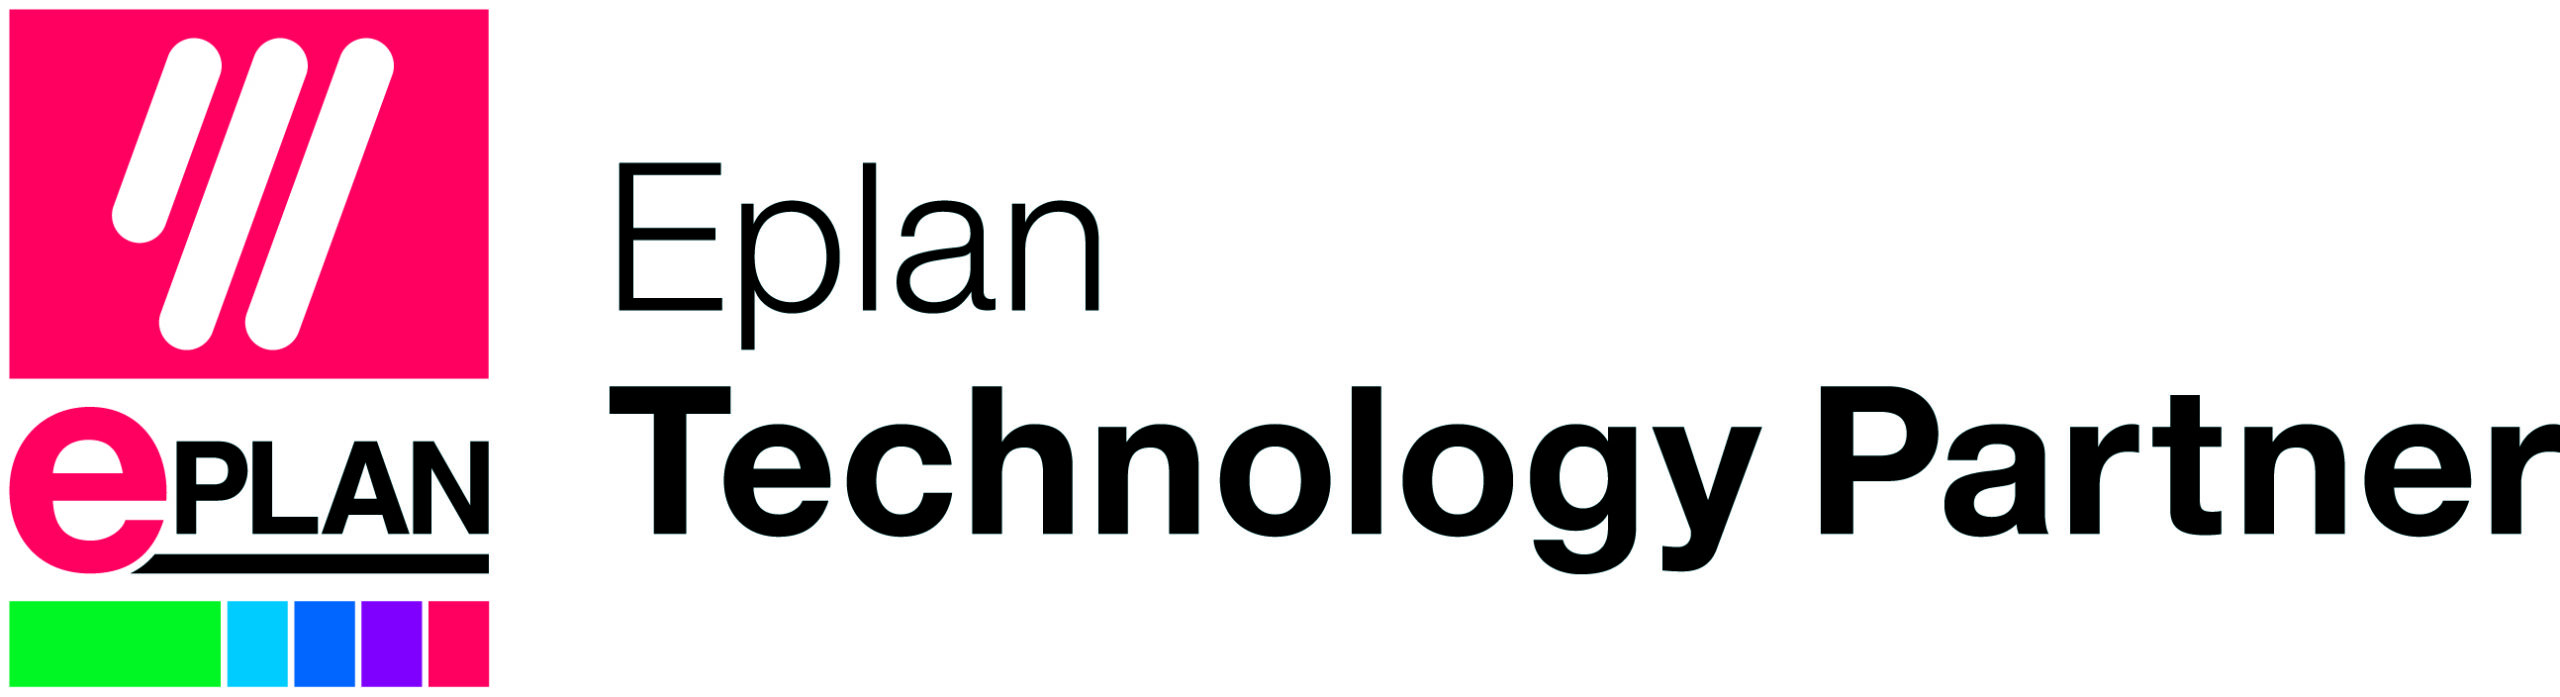 EPLAN_Signet_Technology_Partner_CMYK_pos